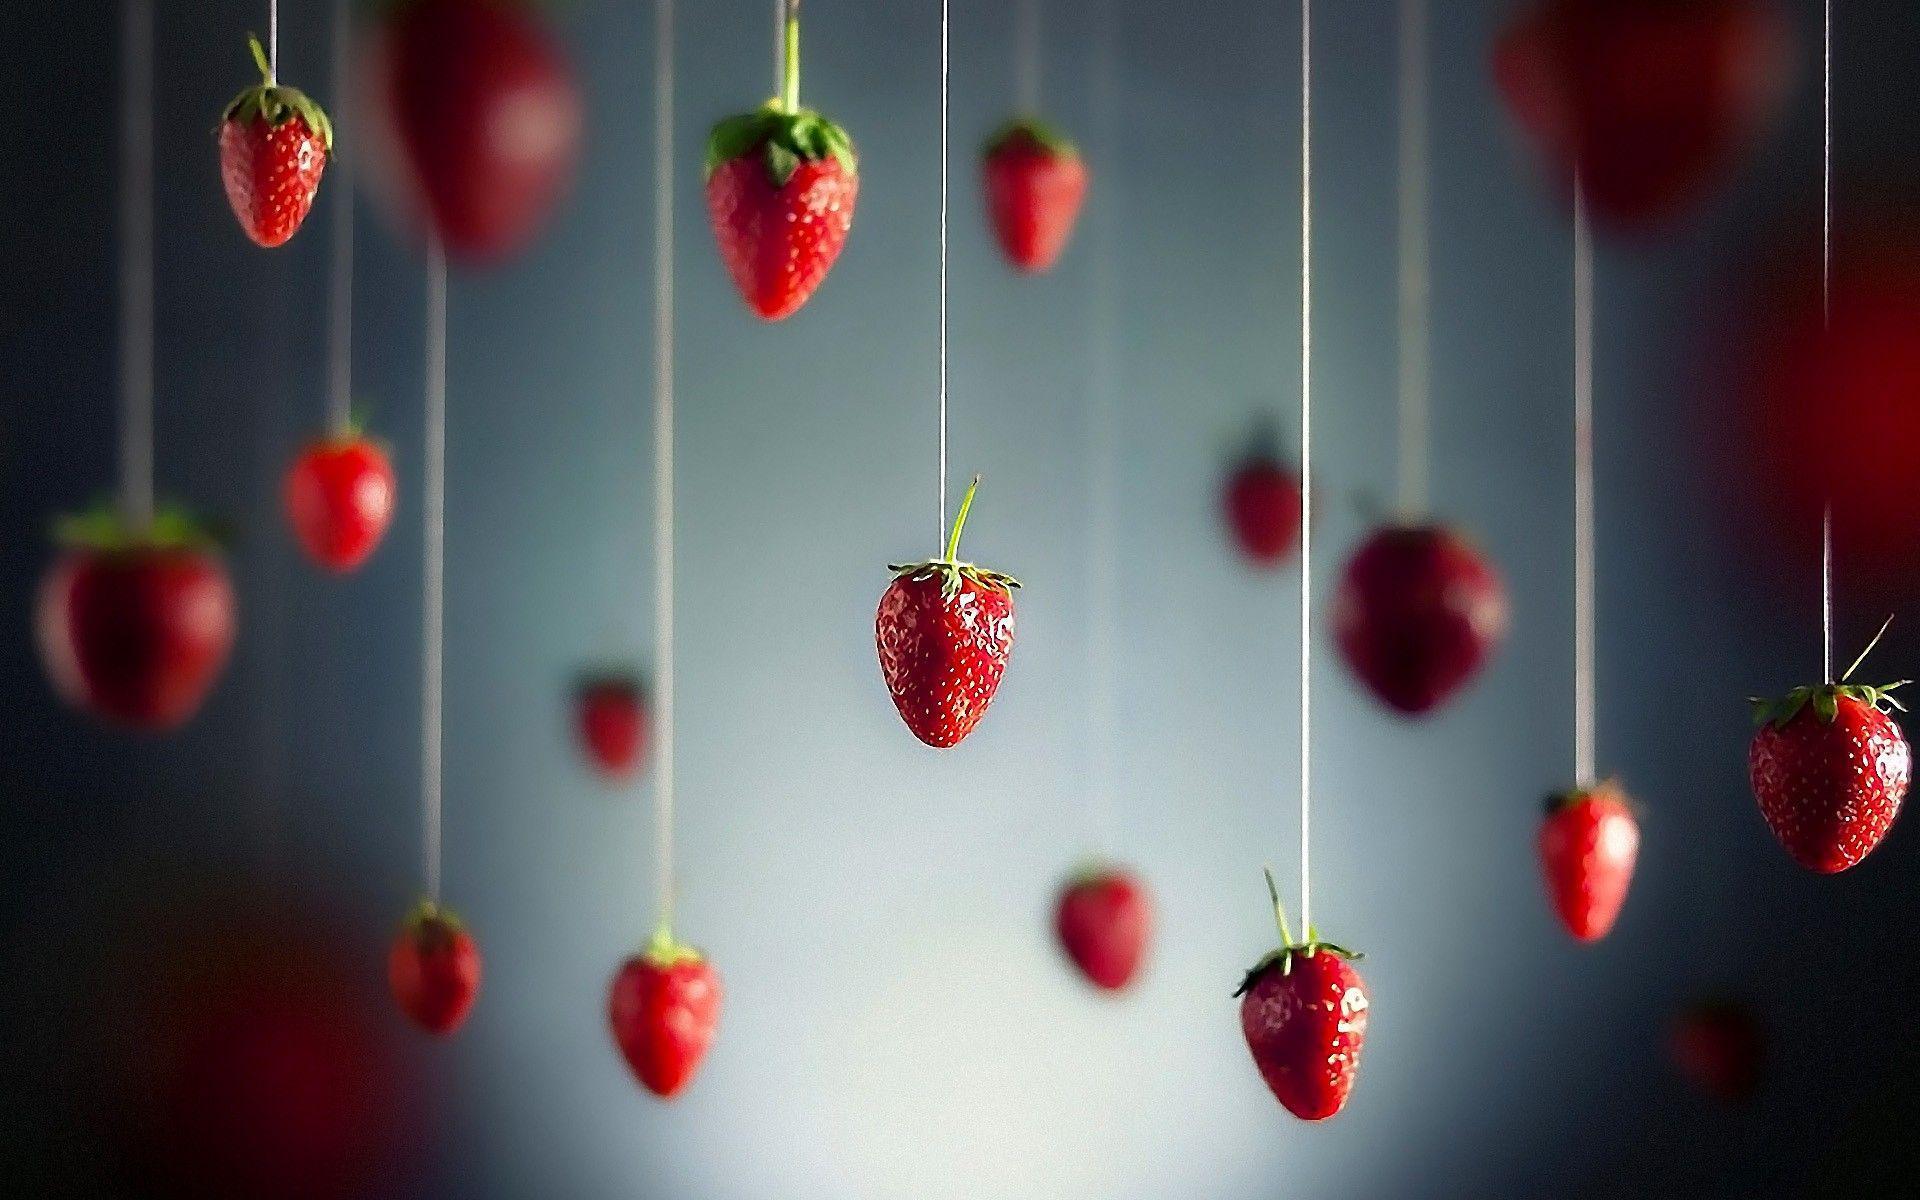 HD Quality Strawberries Image, Strawberries Wallpaper HD Base